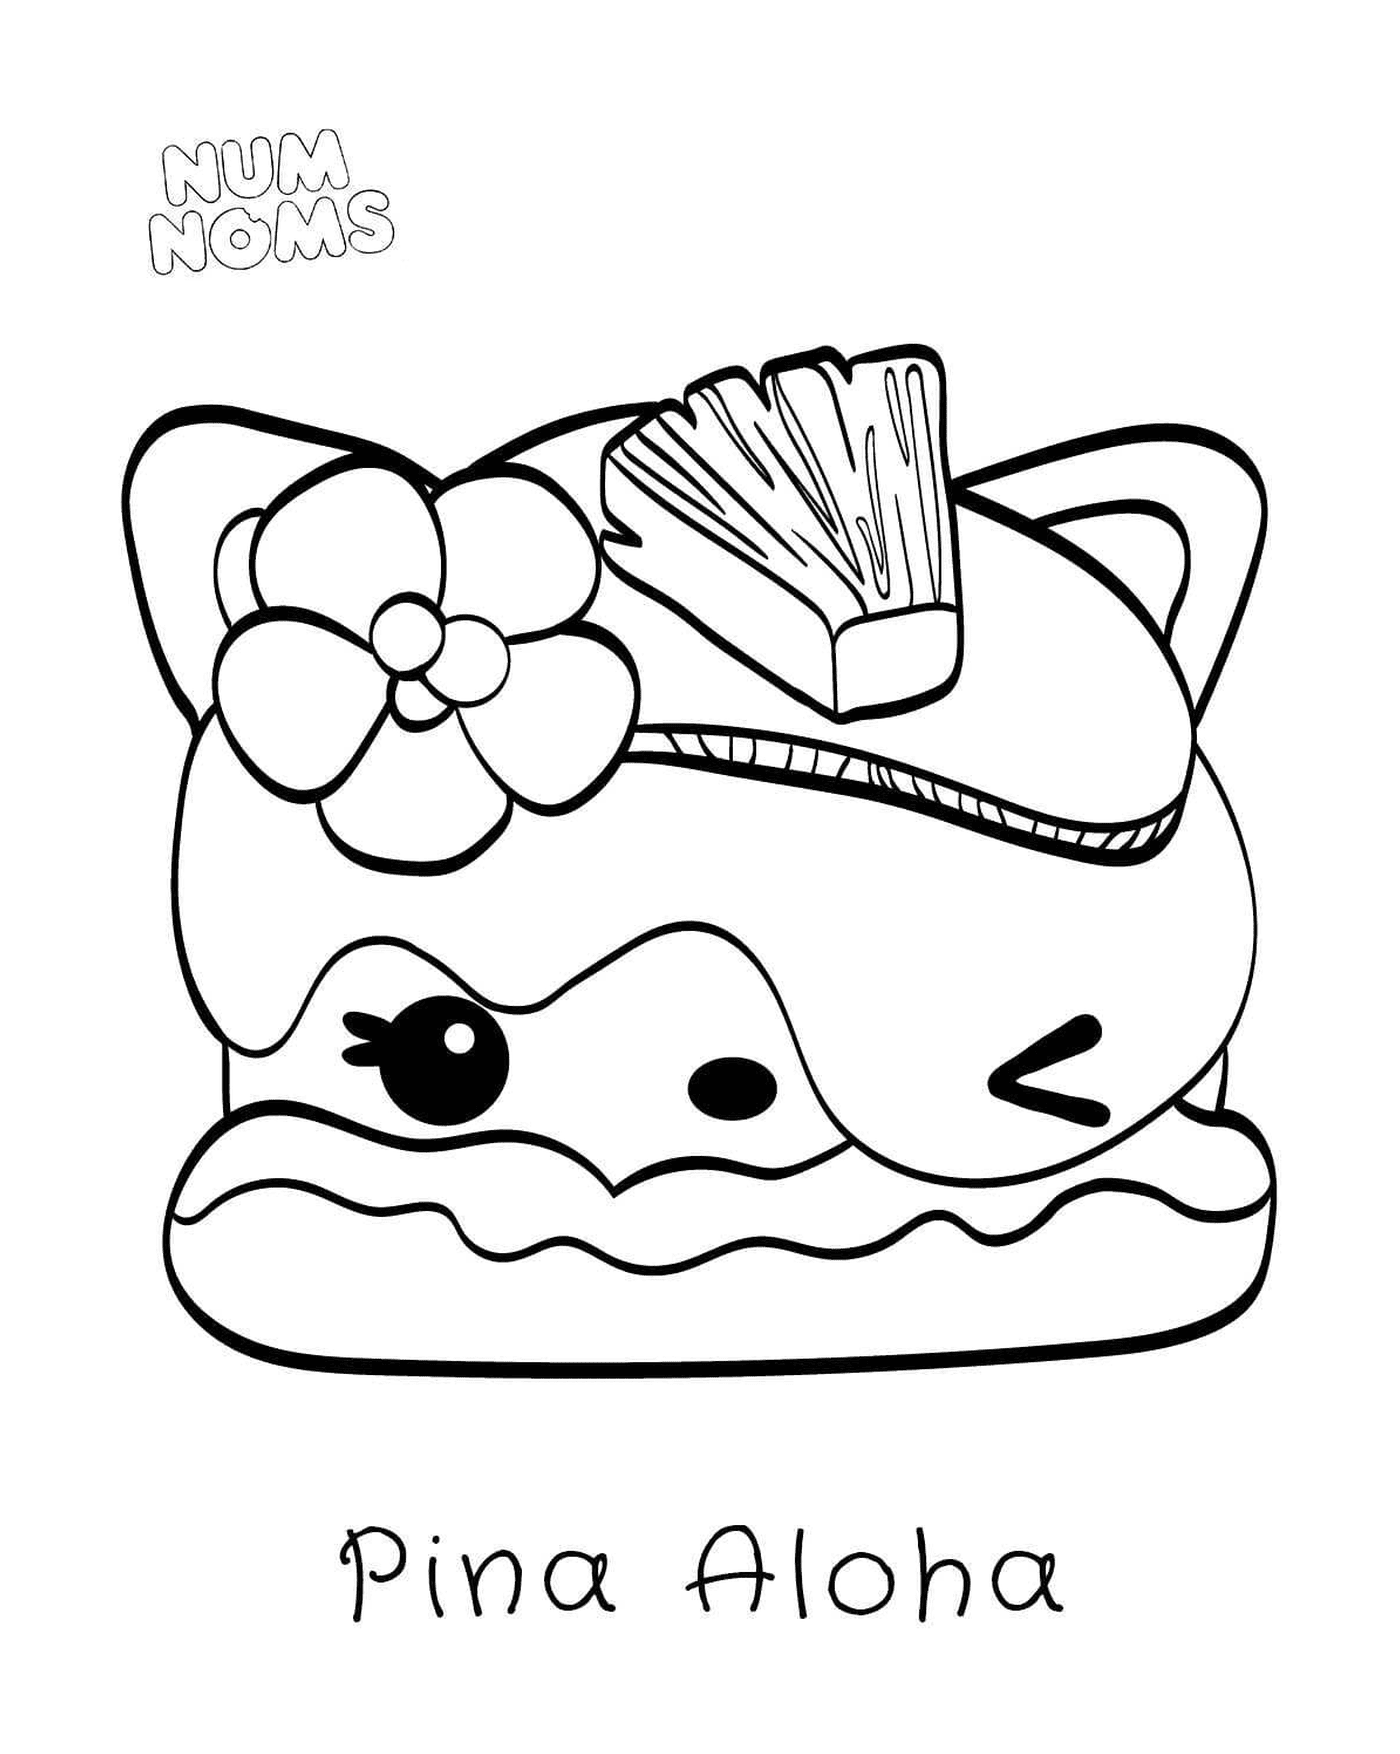  Pina Aloha Num Names, ein fruchtiges Sandwich 